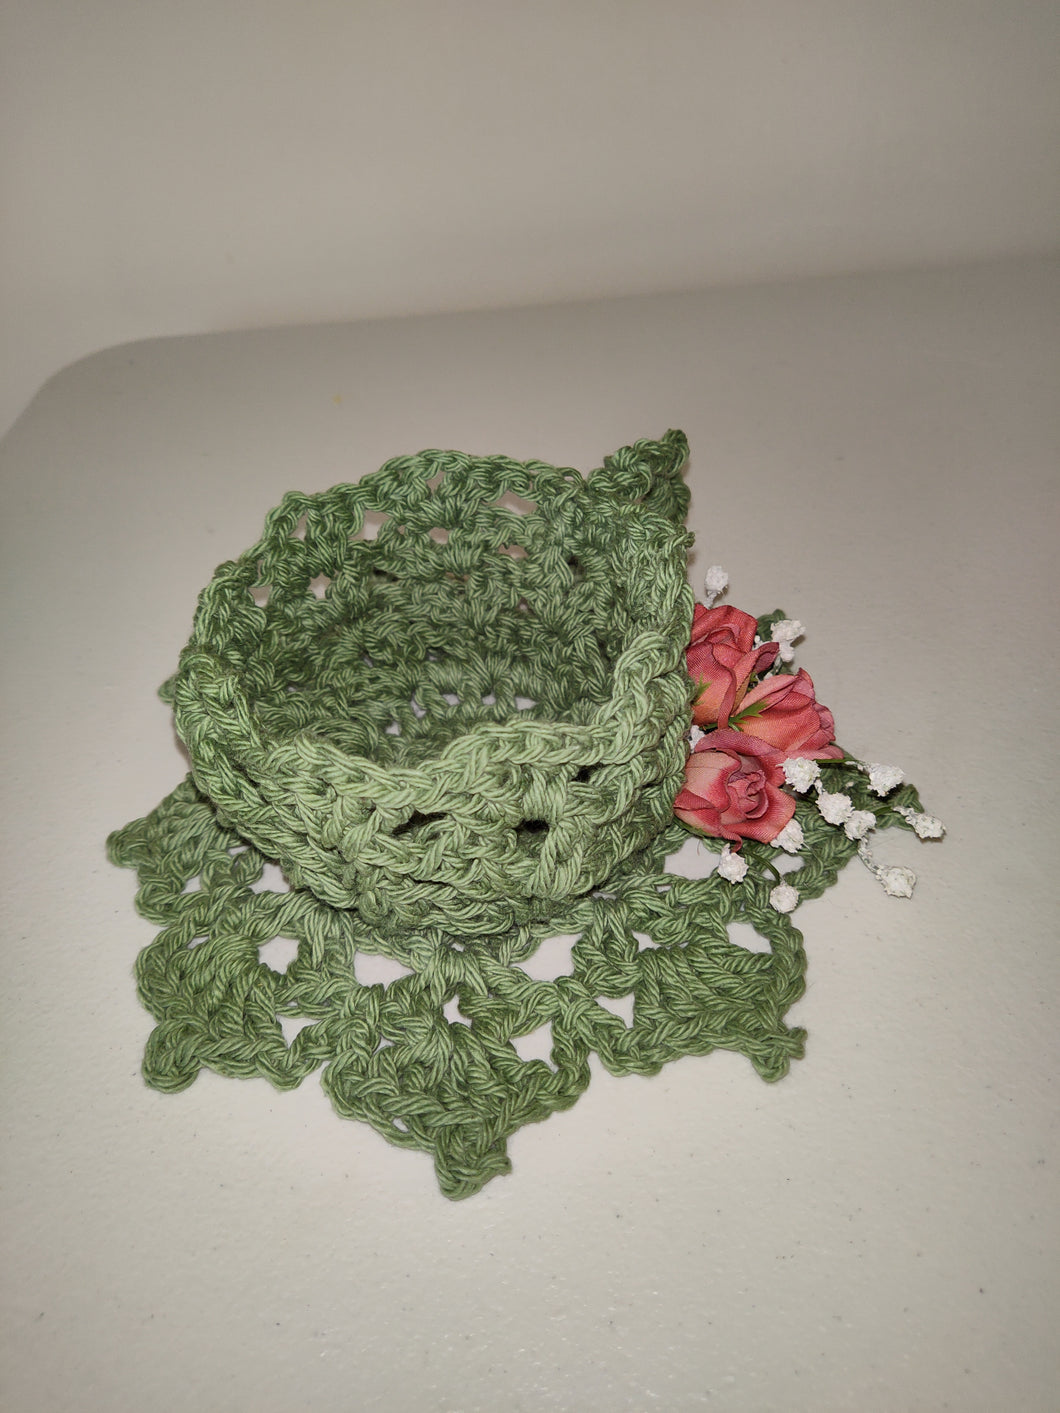 Crochet Teacup And Saucer